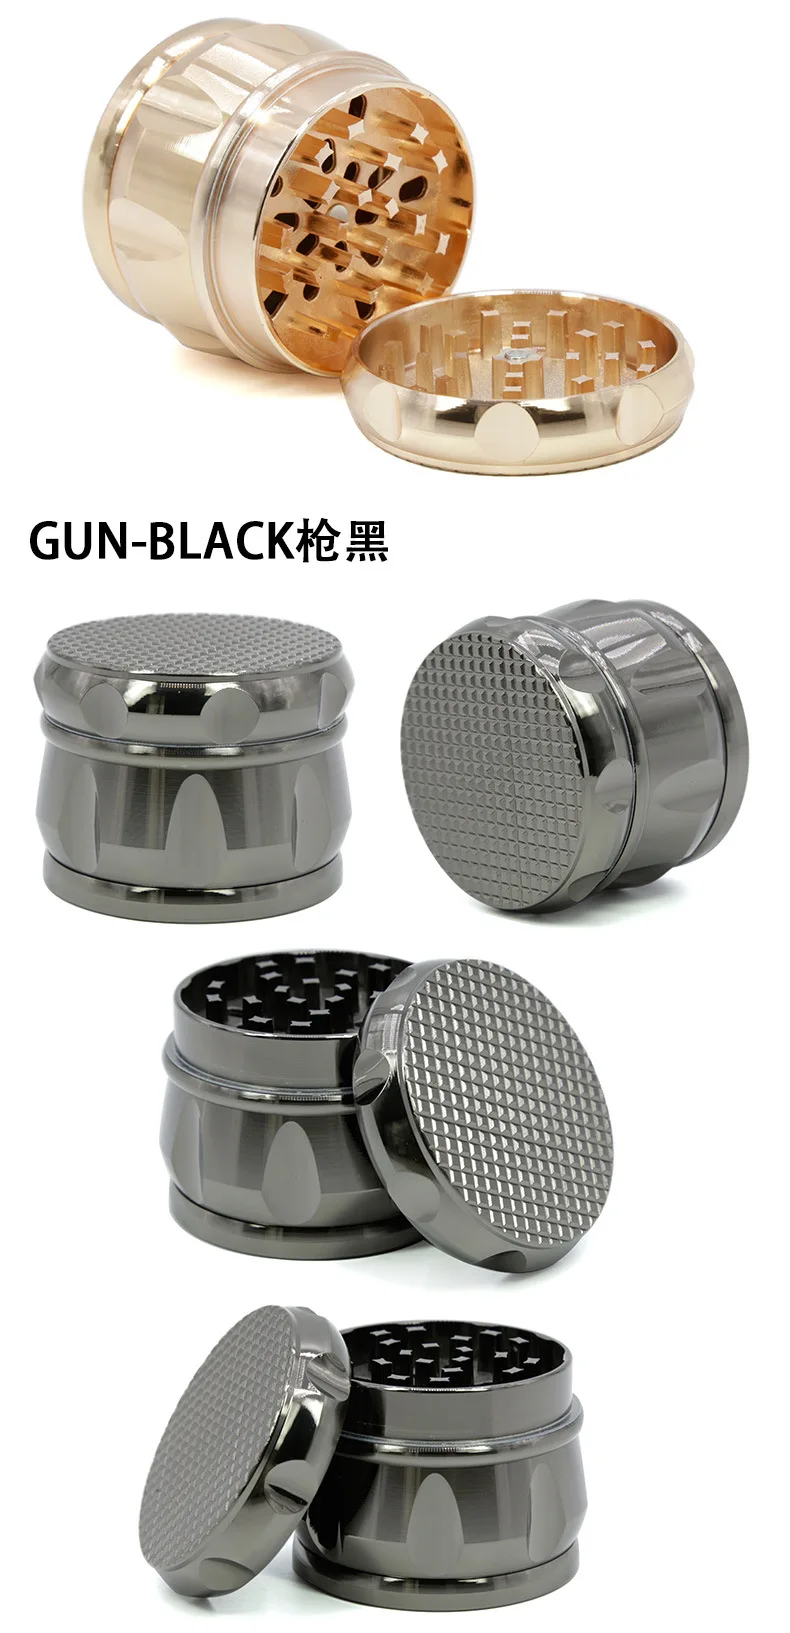 4 Layers Metal Smoke Grinder special grid cover Tobacco Smoking practical smoking accessories Herb Grinders